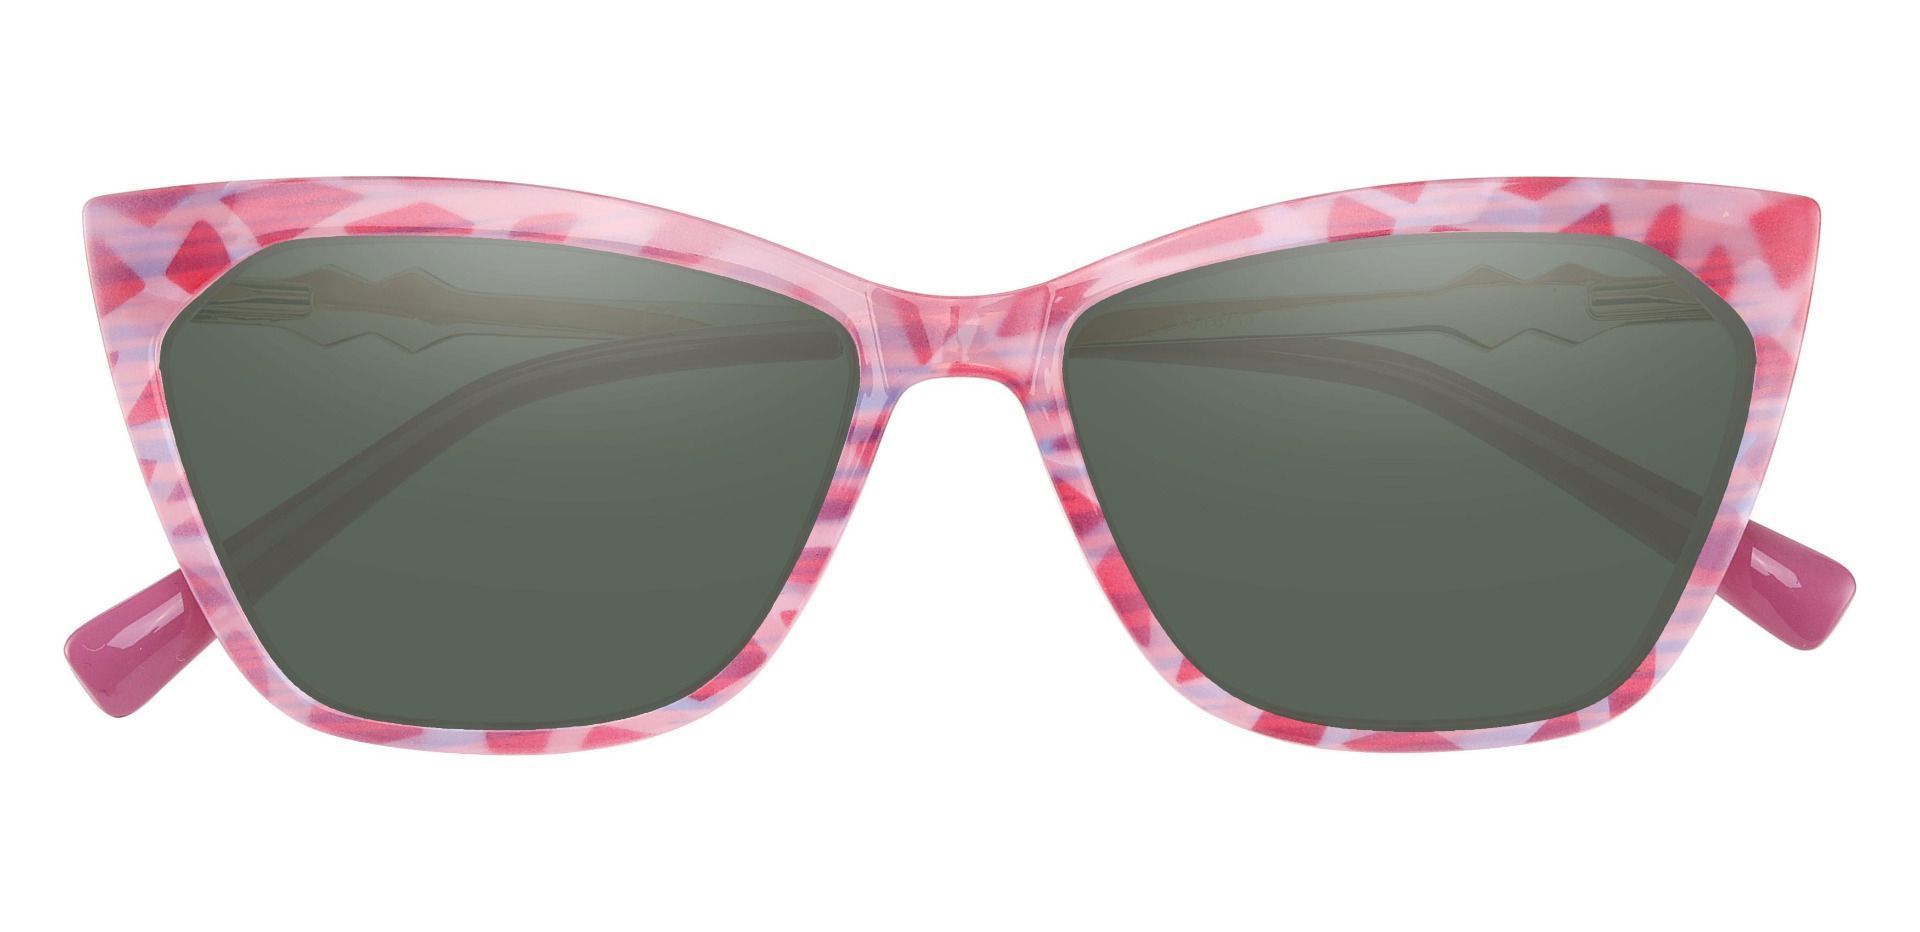 Addison Cat Eye Progressive Sunglasses - Pink Frame With Green Lenses